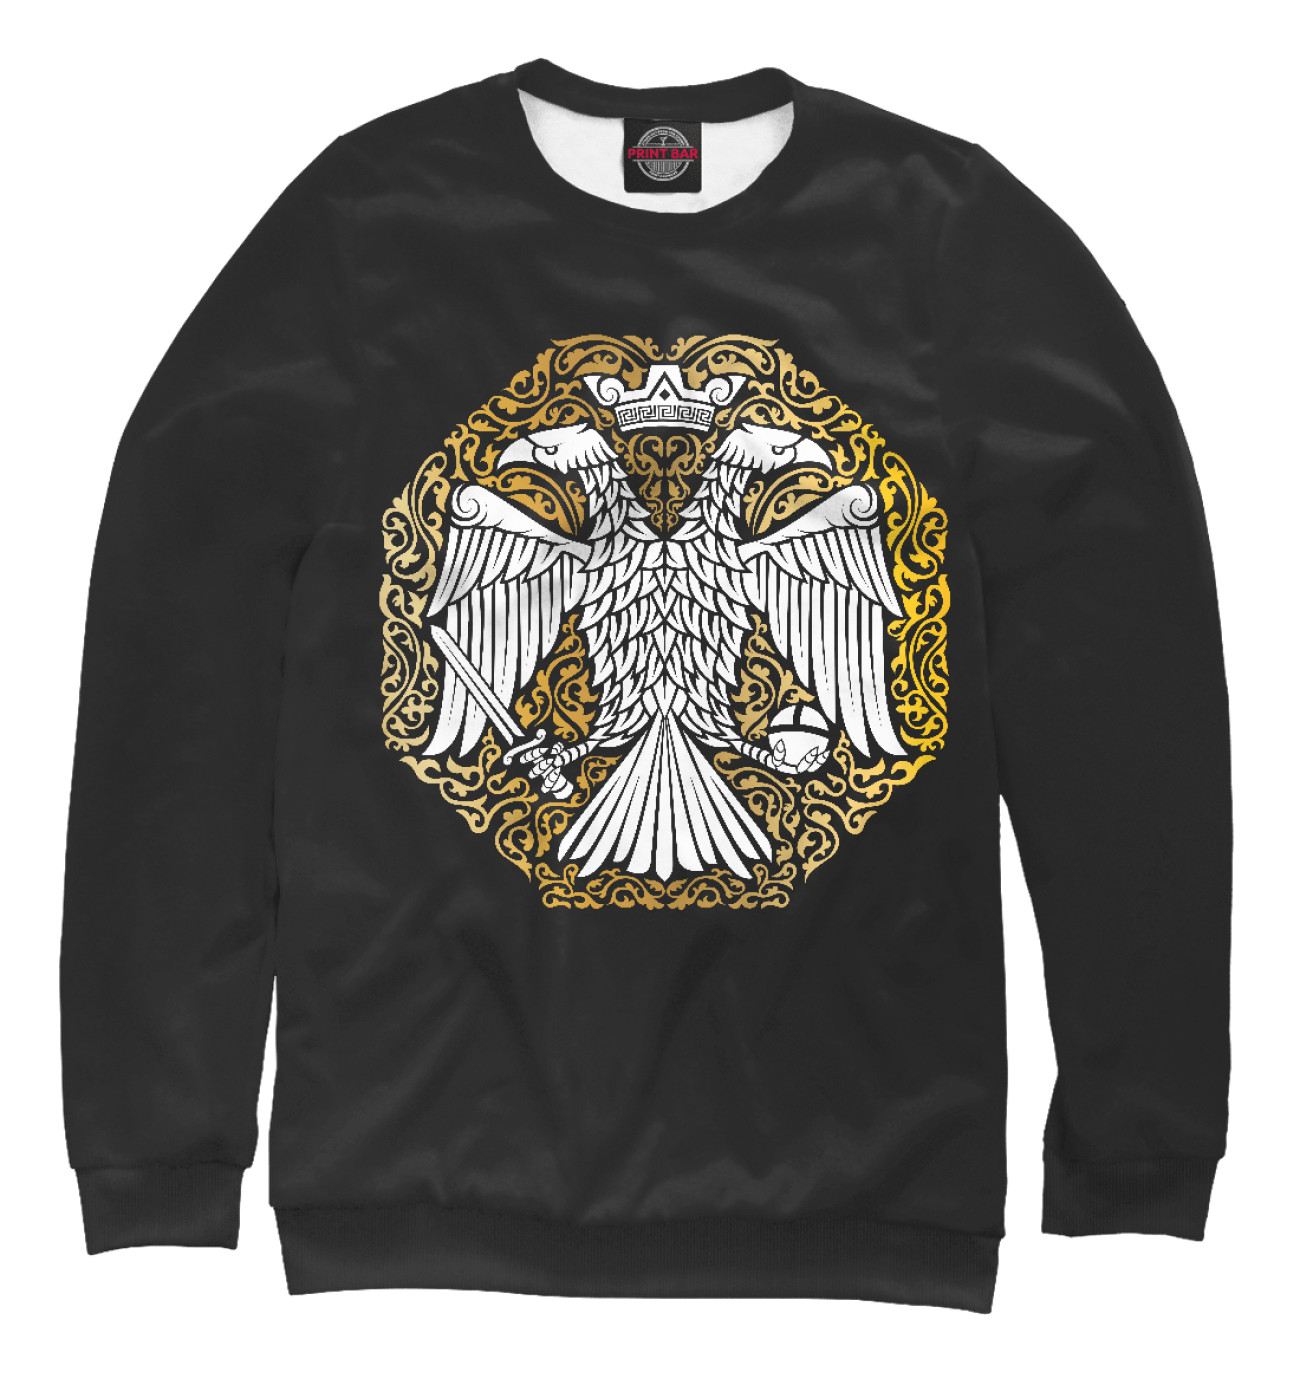 Мужской Свитшот Византийский двуглавый орёл, артикул: SRF-821911-swi-2